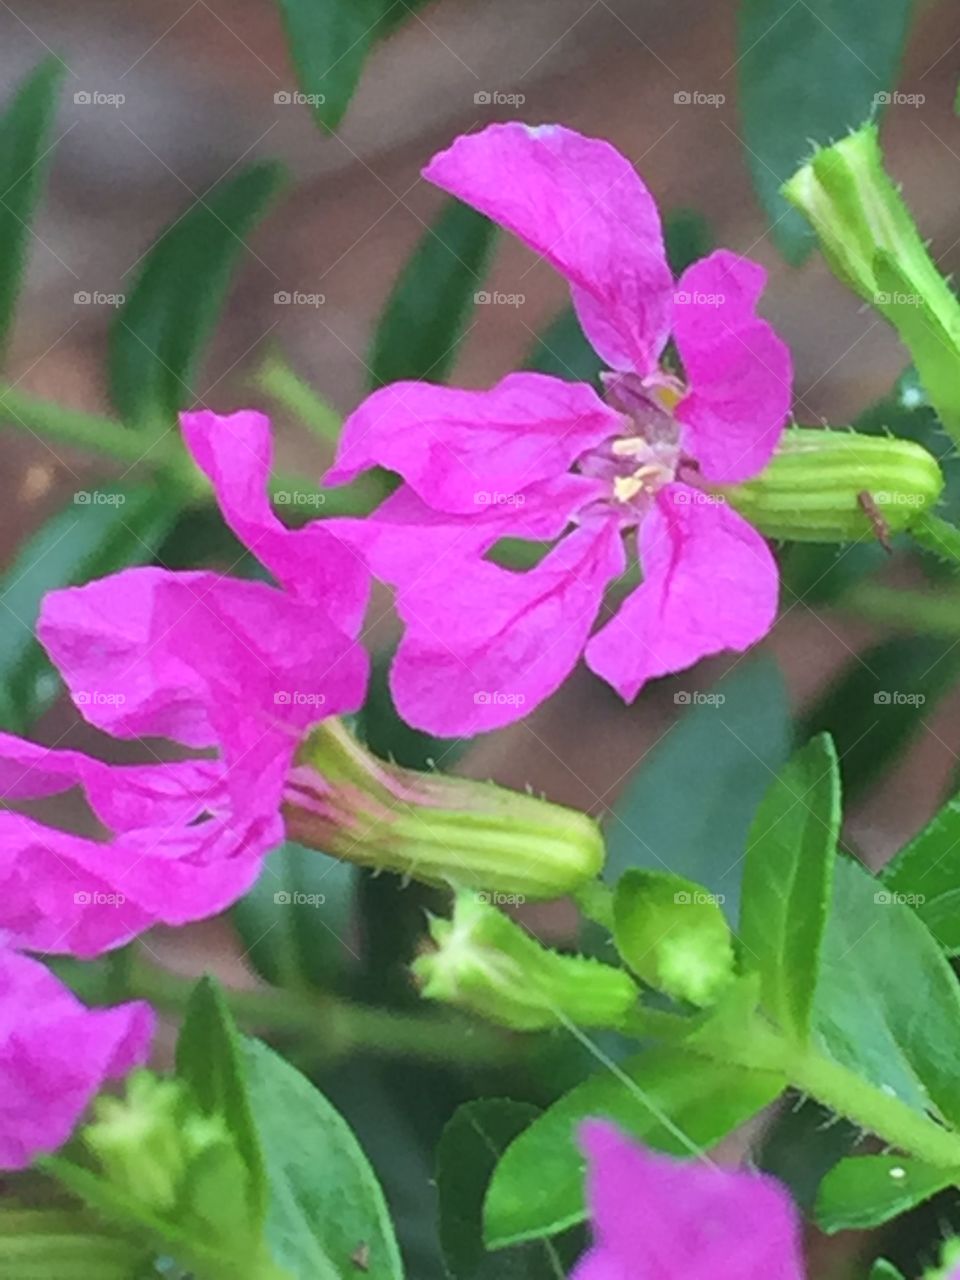 Tiny purple flowers 